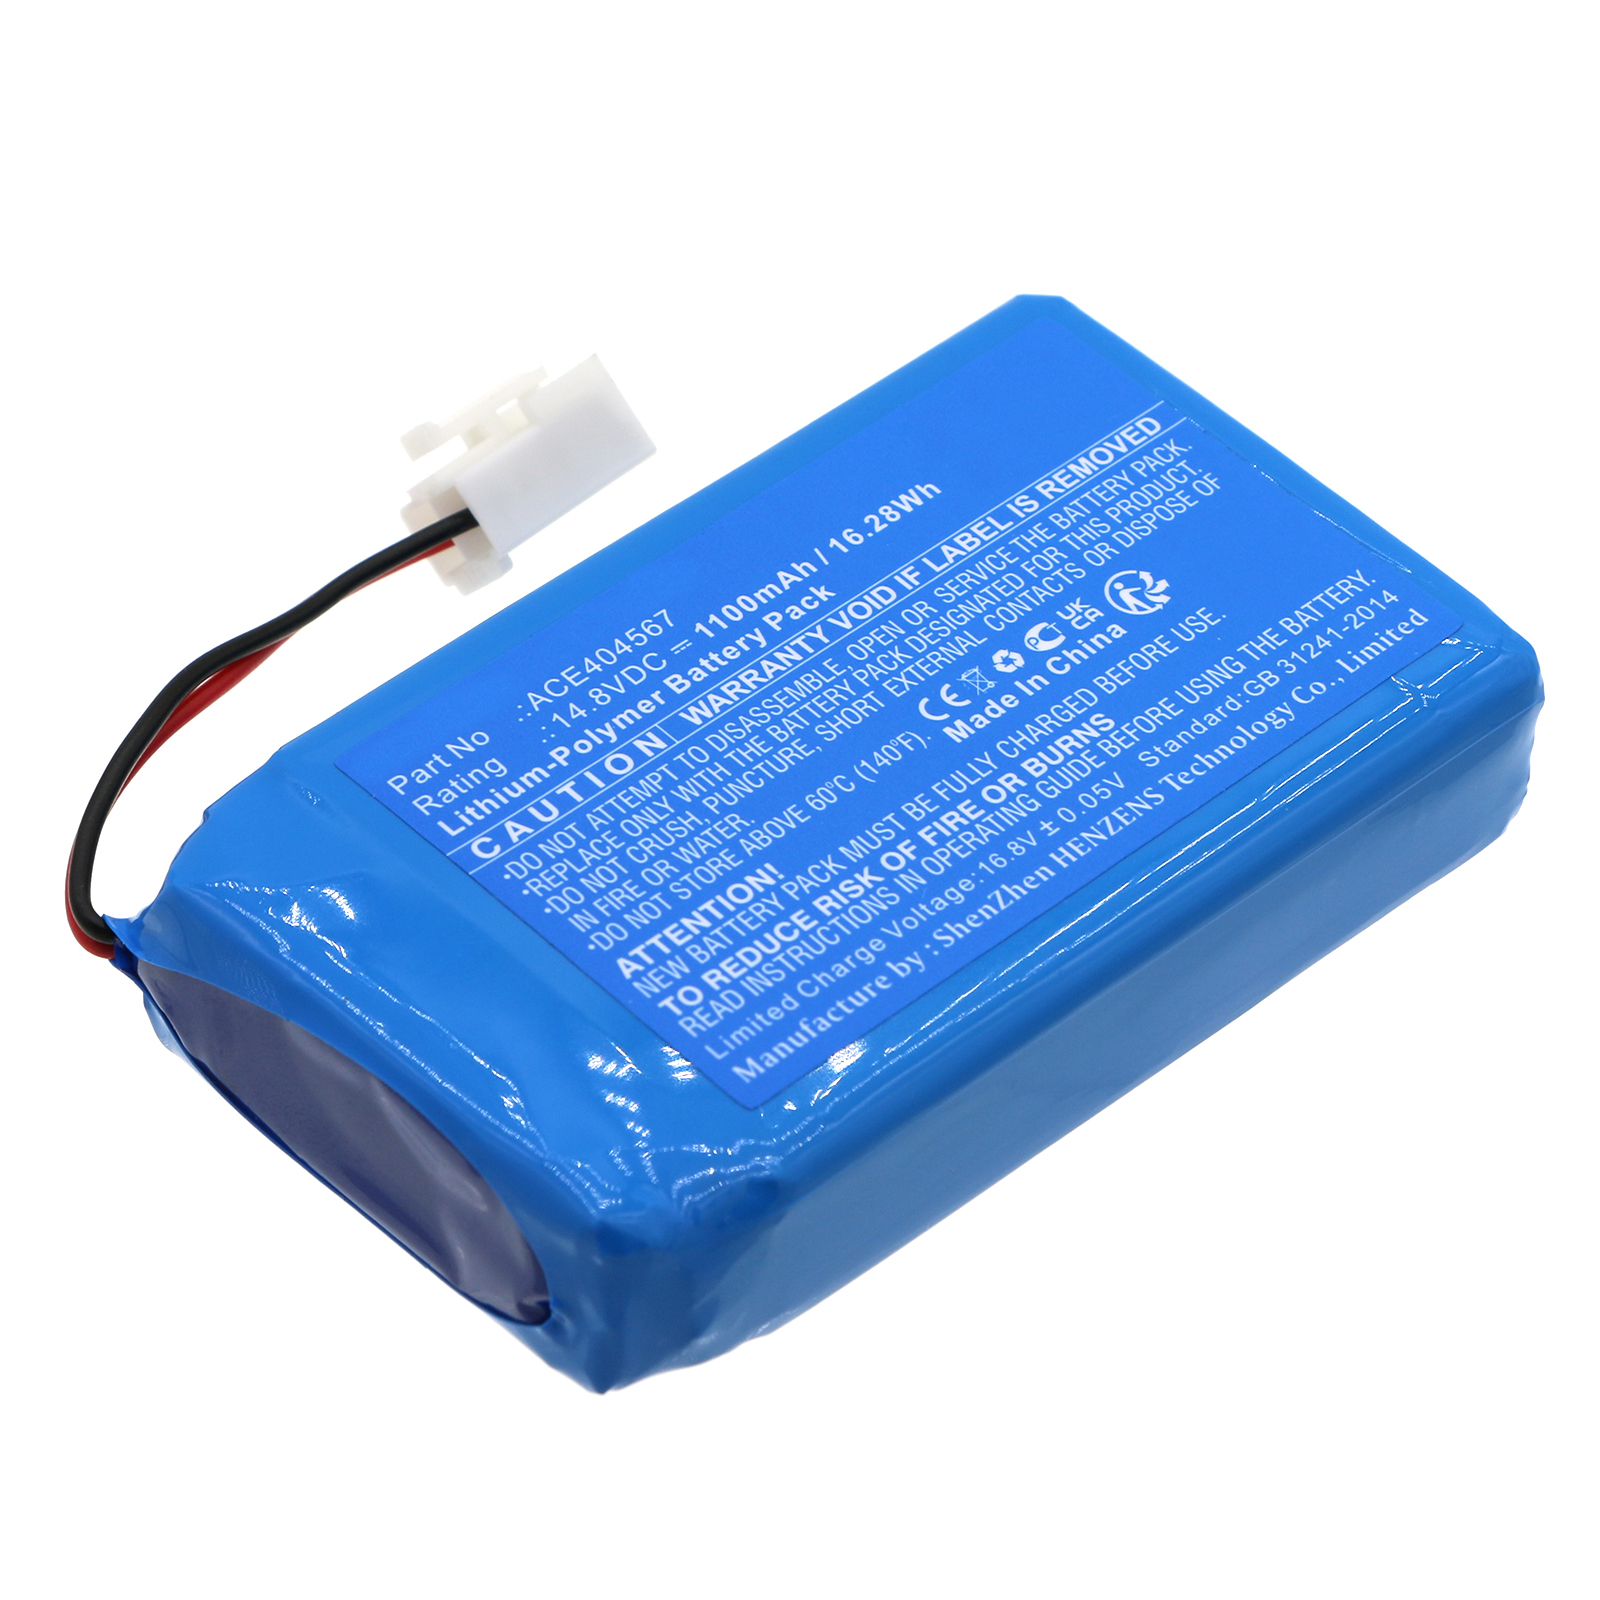 Batteries for CobraRemote Control